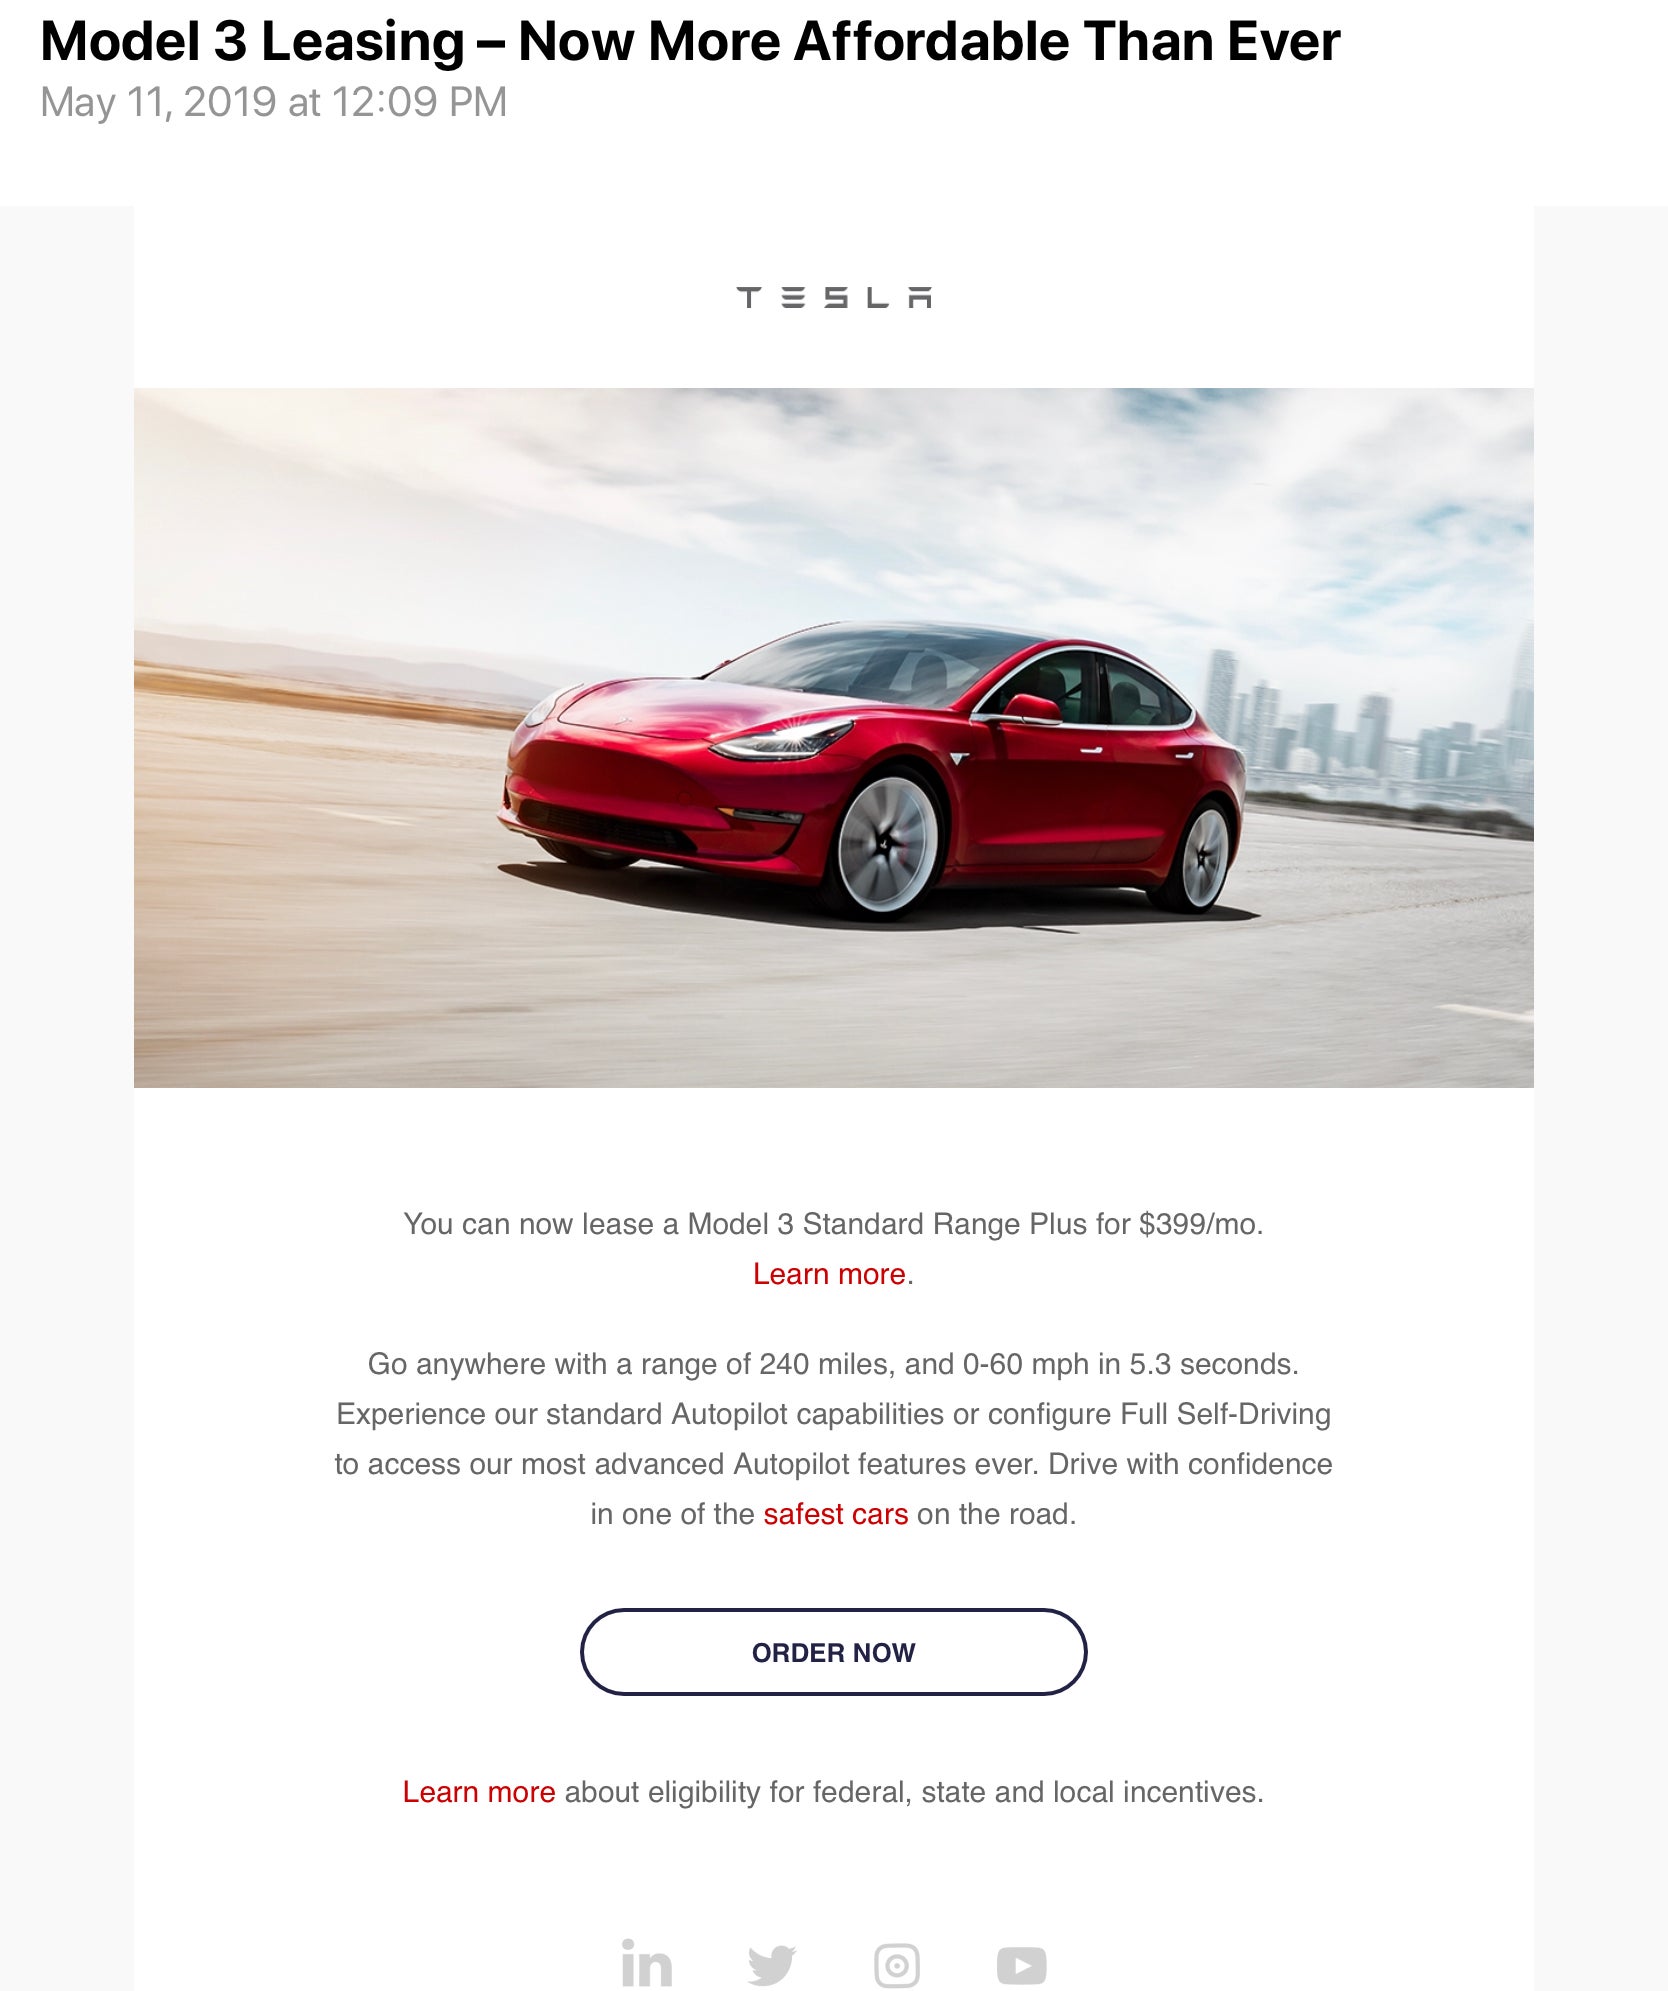 Tesla Model 3 Leasing email